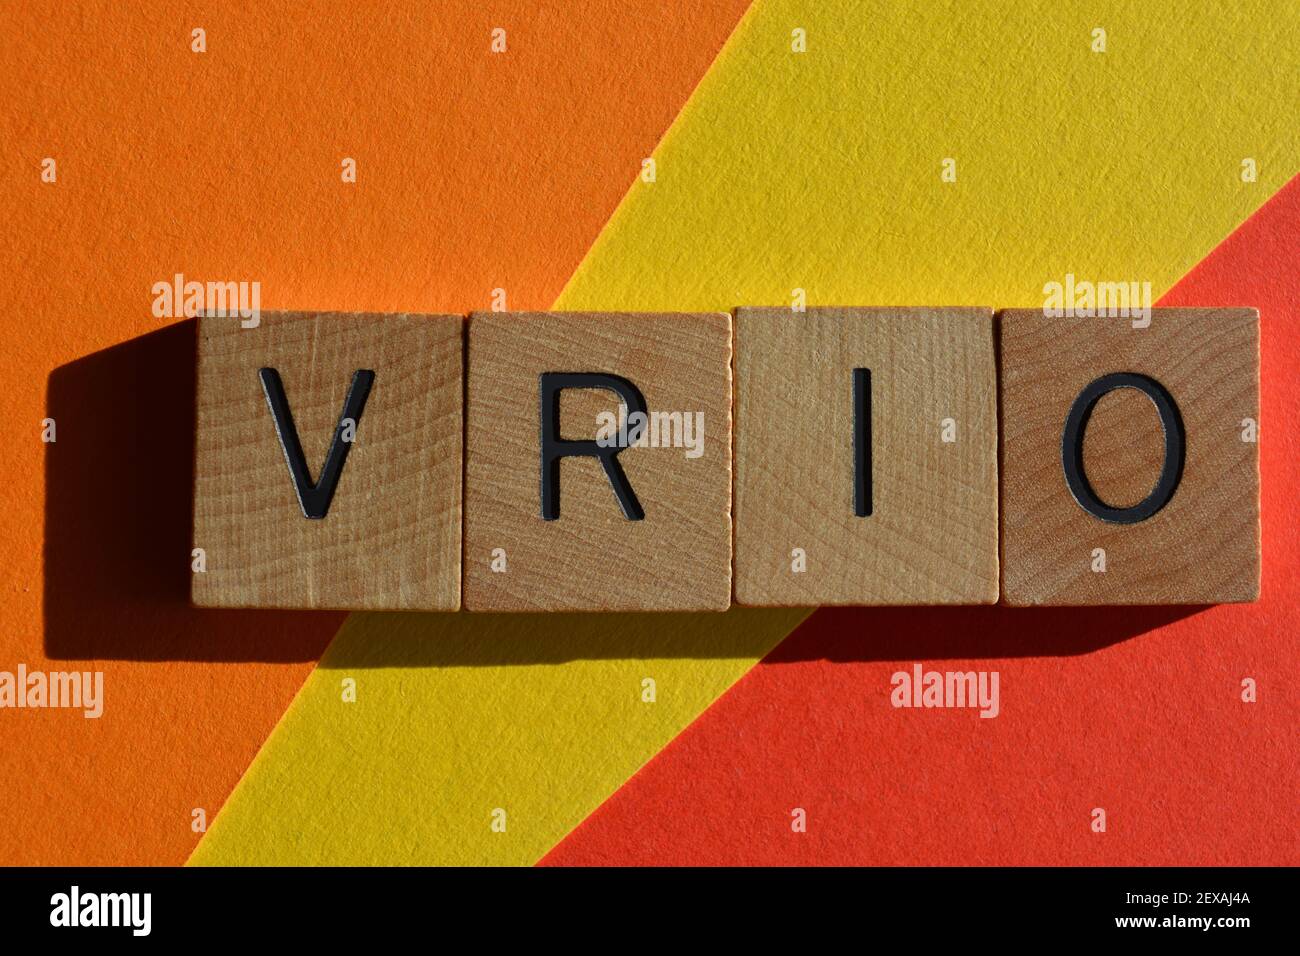 vrio, business acronym for Value, Rarity, Inimitability, and Organization Stock Photo